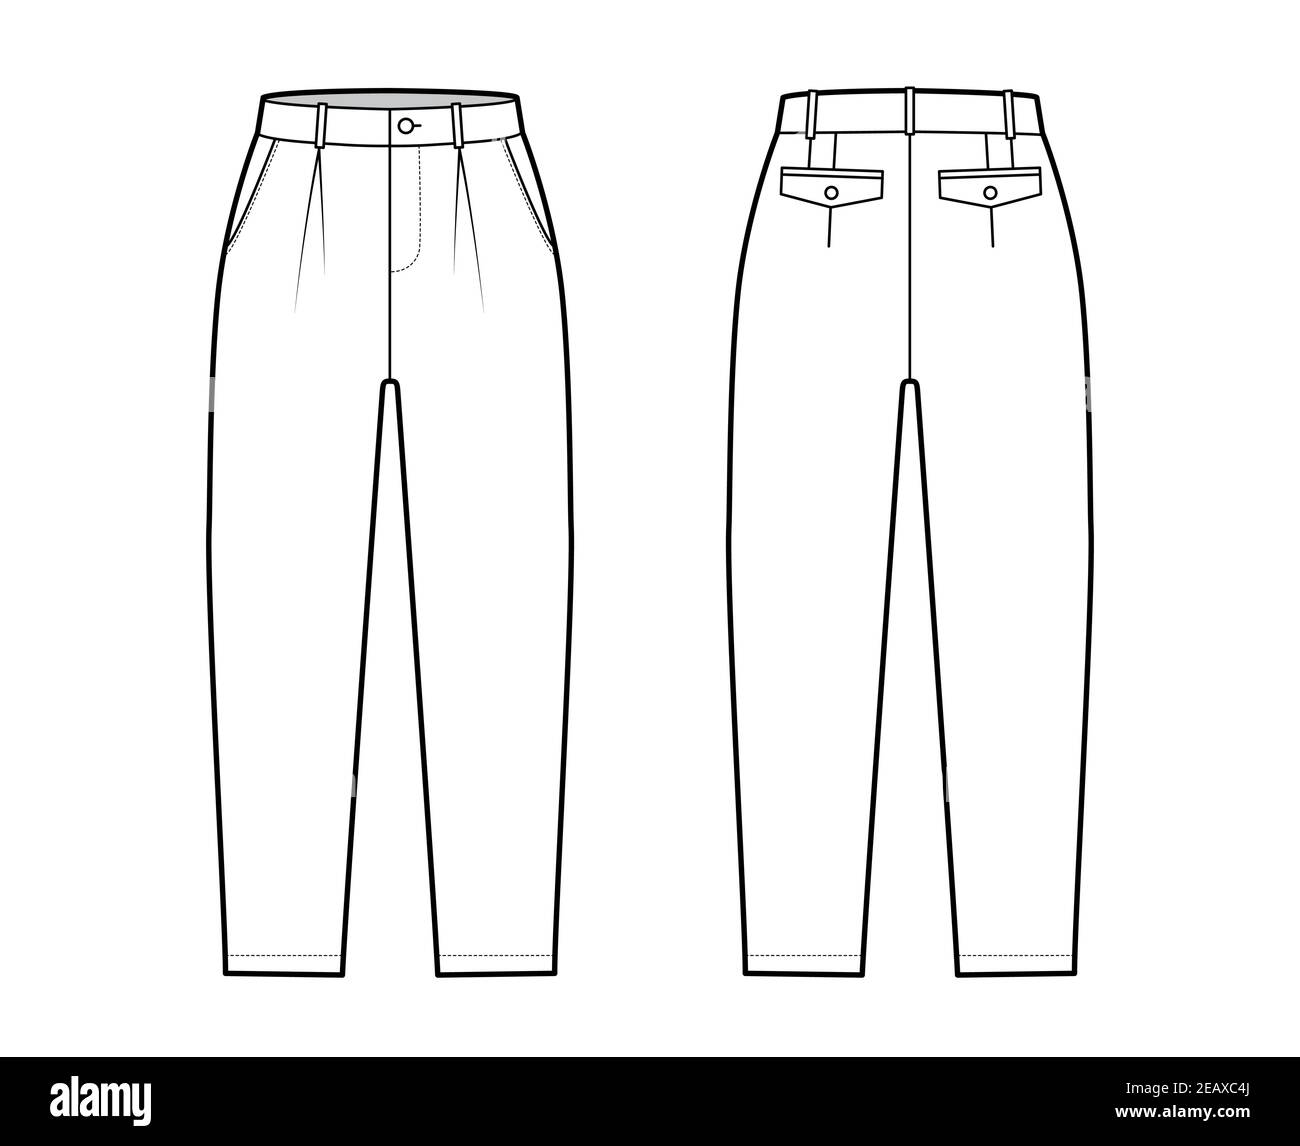 Capri pants technical fashion illustration with belt loops, calf length,  single pleat, normal waist, high rise